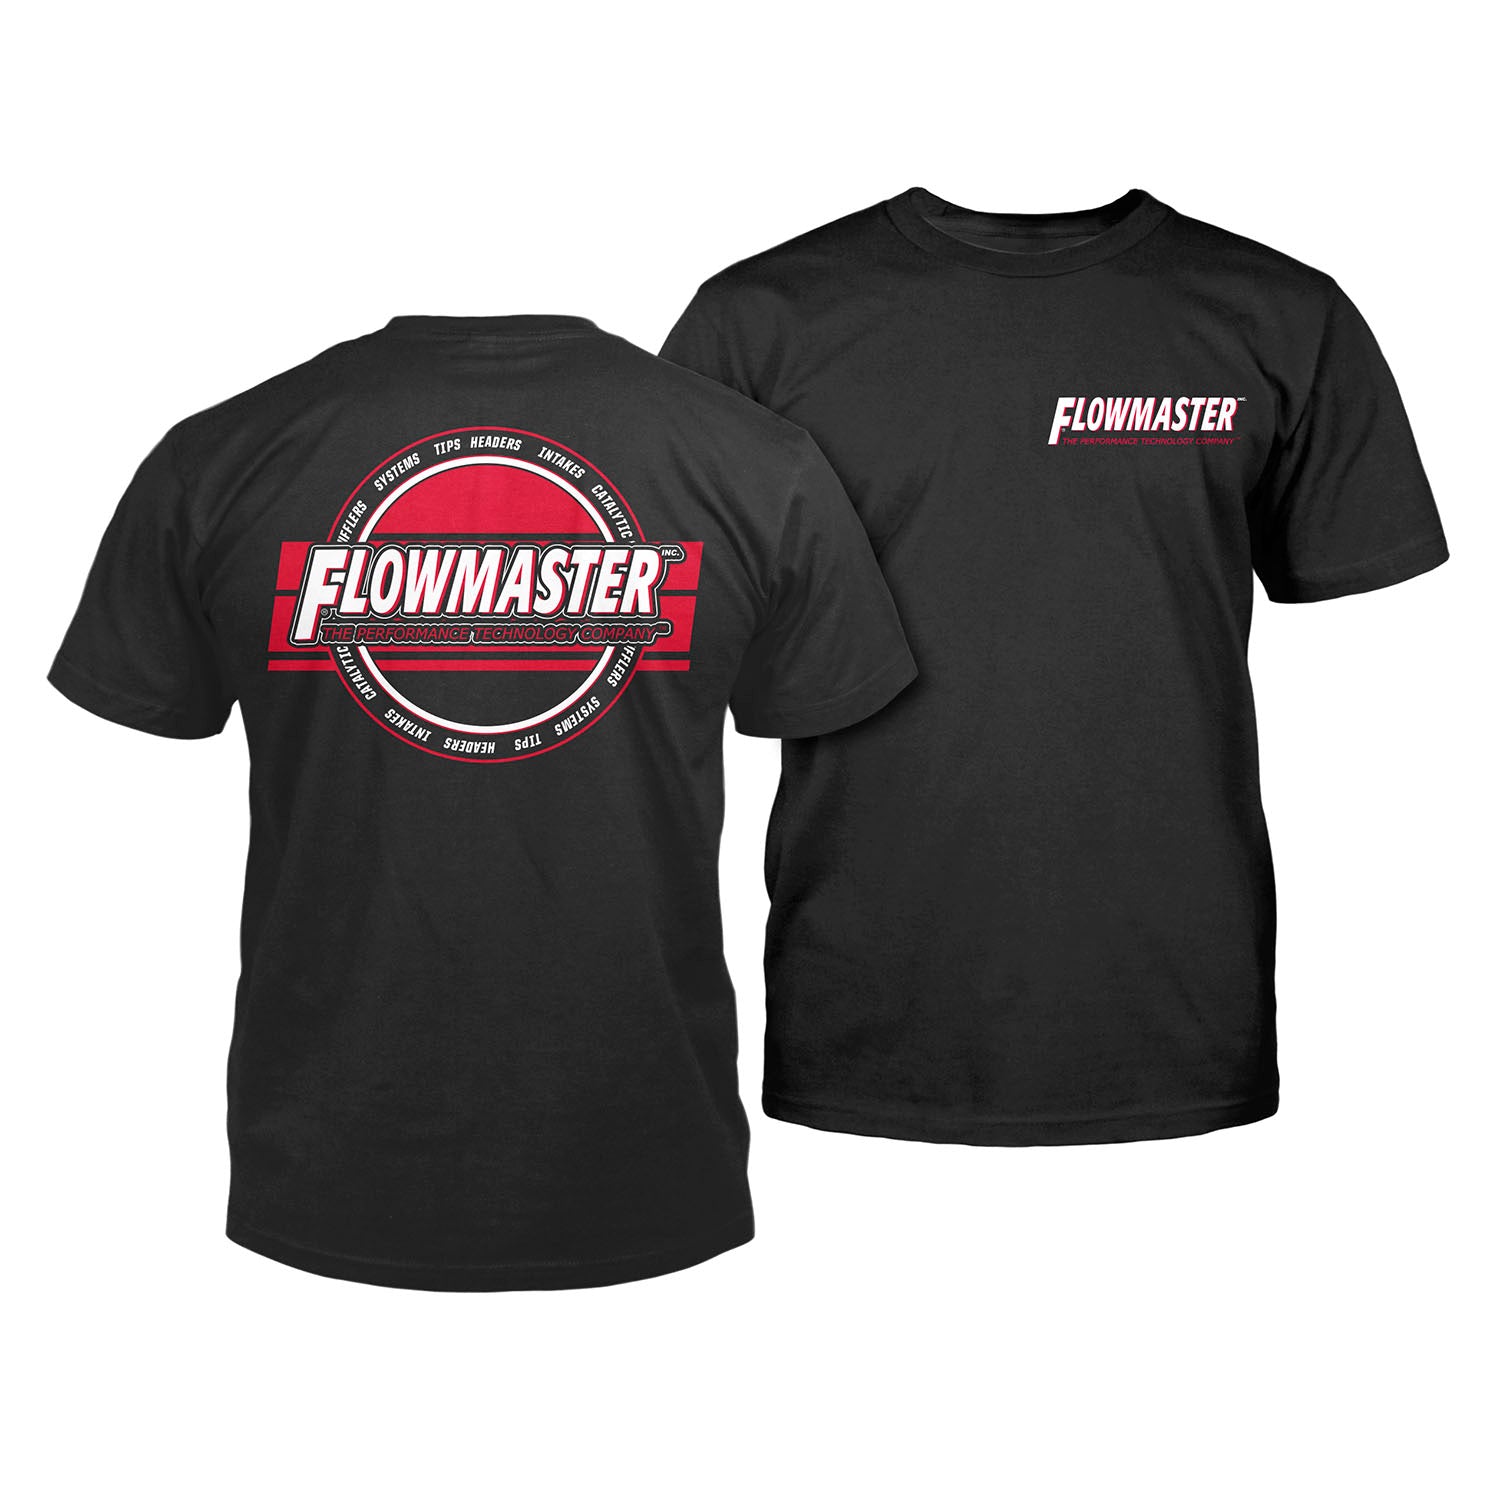 Flowmaster T-Shirt 610353